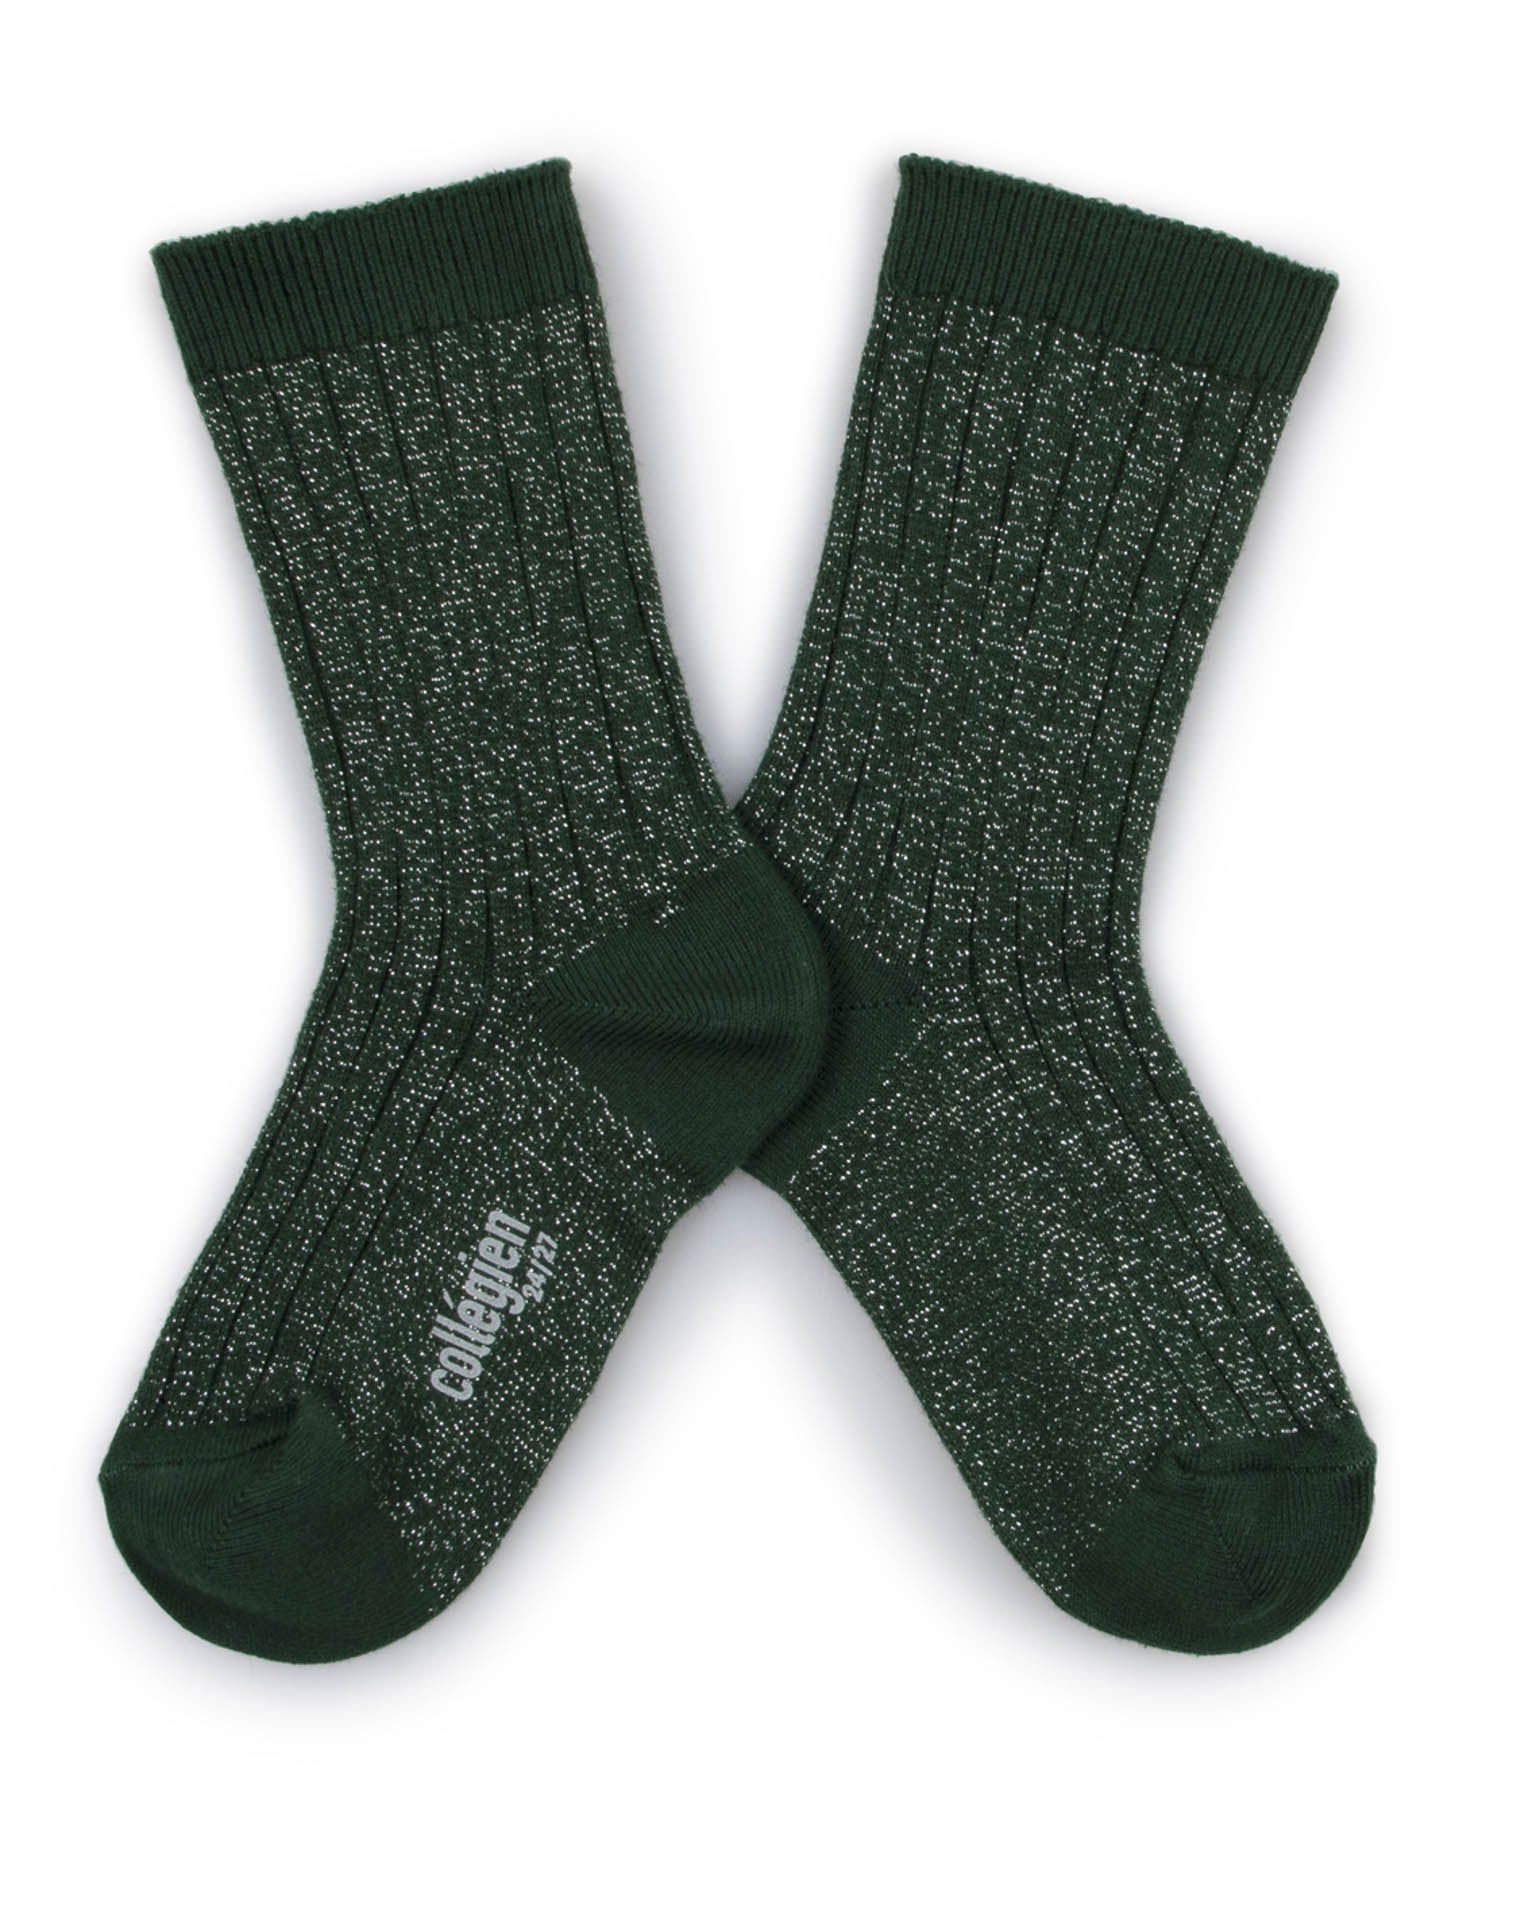 Little collégien accessories victoire crew socks in vert fôret